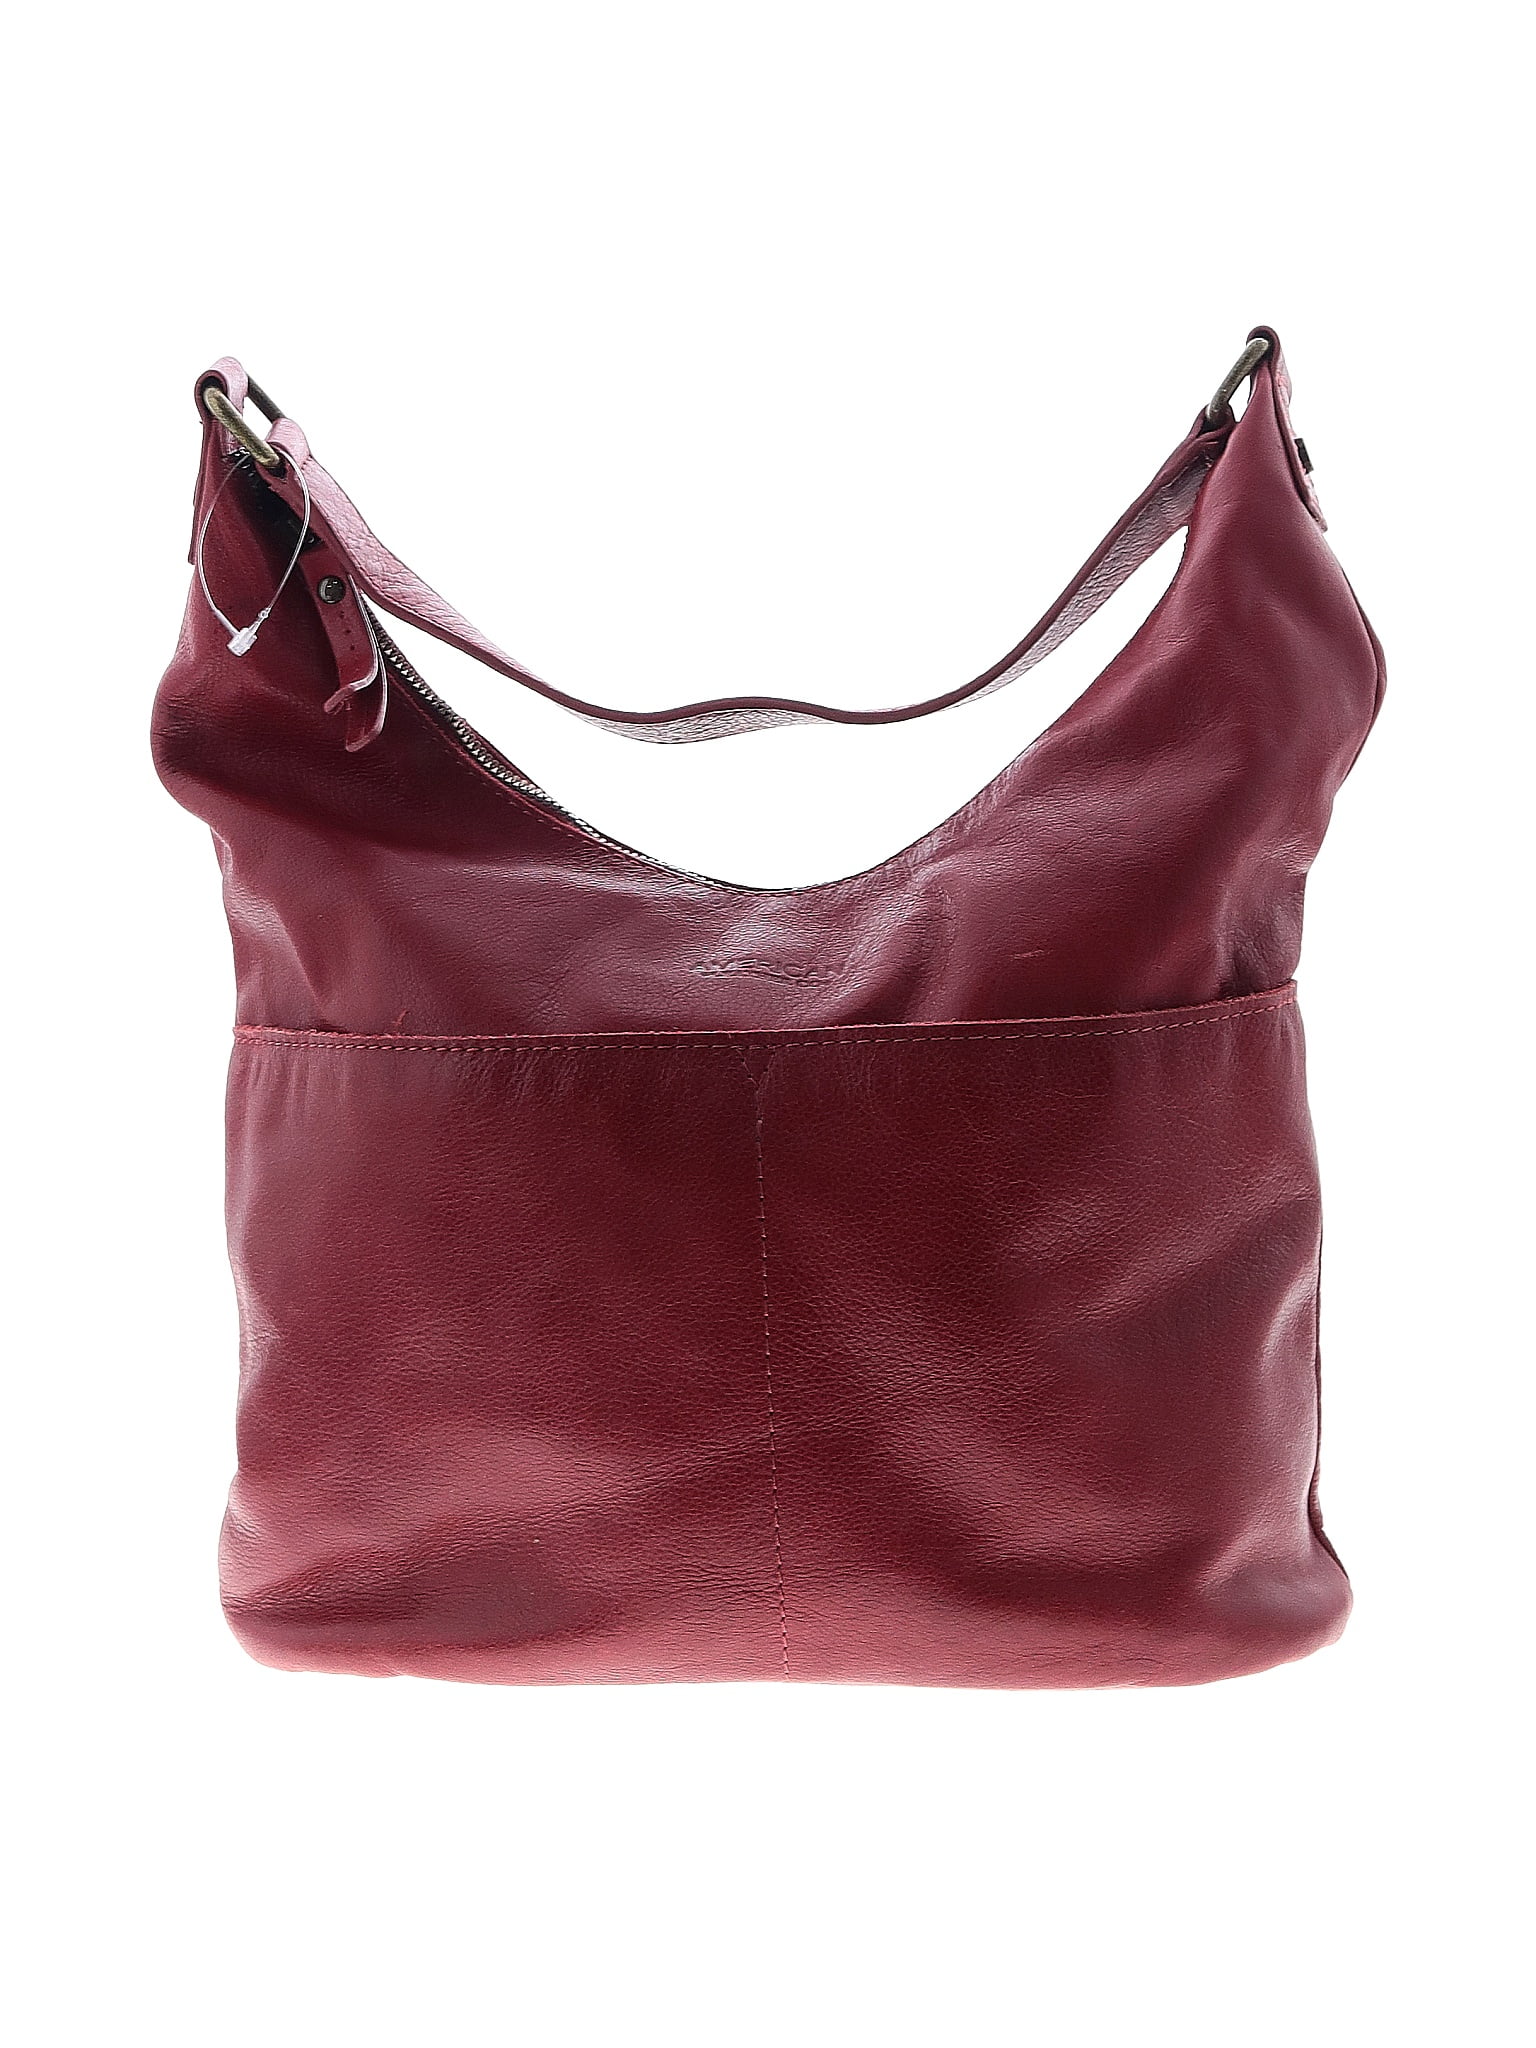 American Leather Co. handbag #americanleatherco - Depop